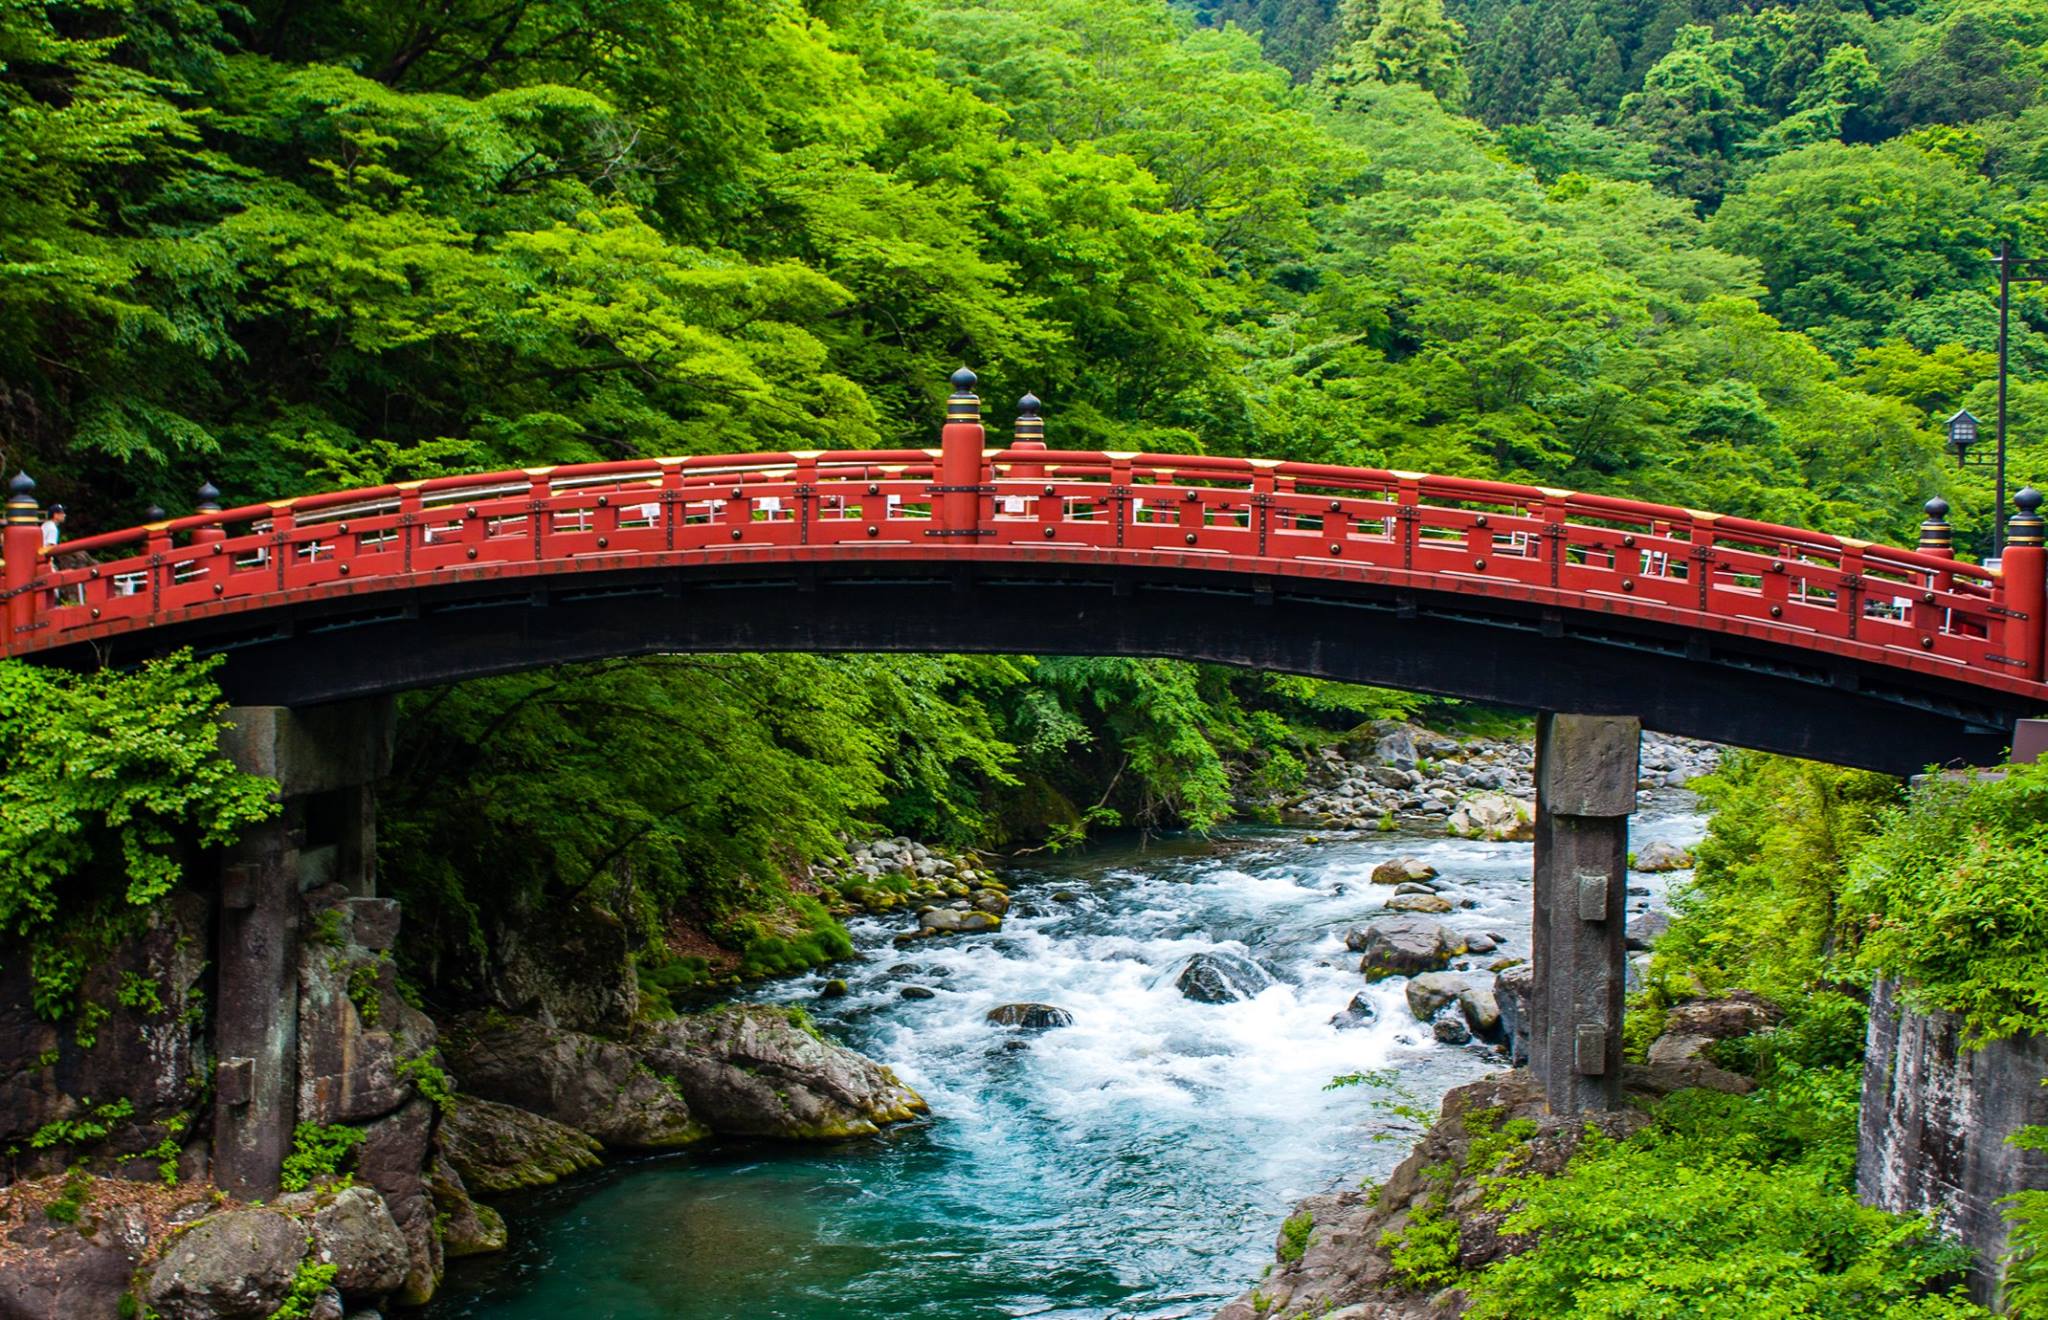 The Shinkyō (Sacred) Bridge